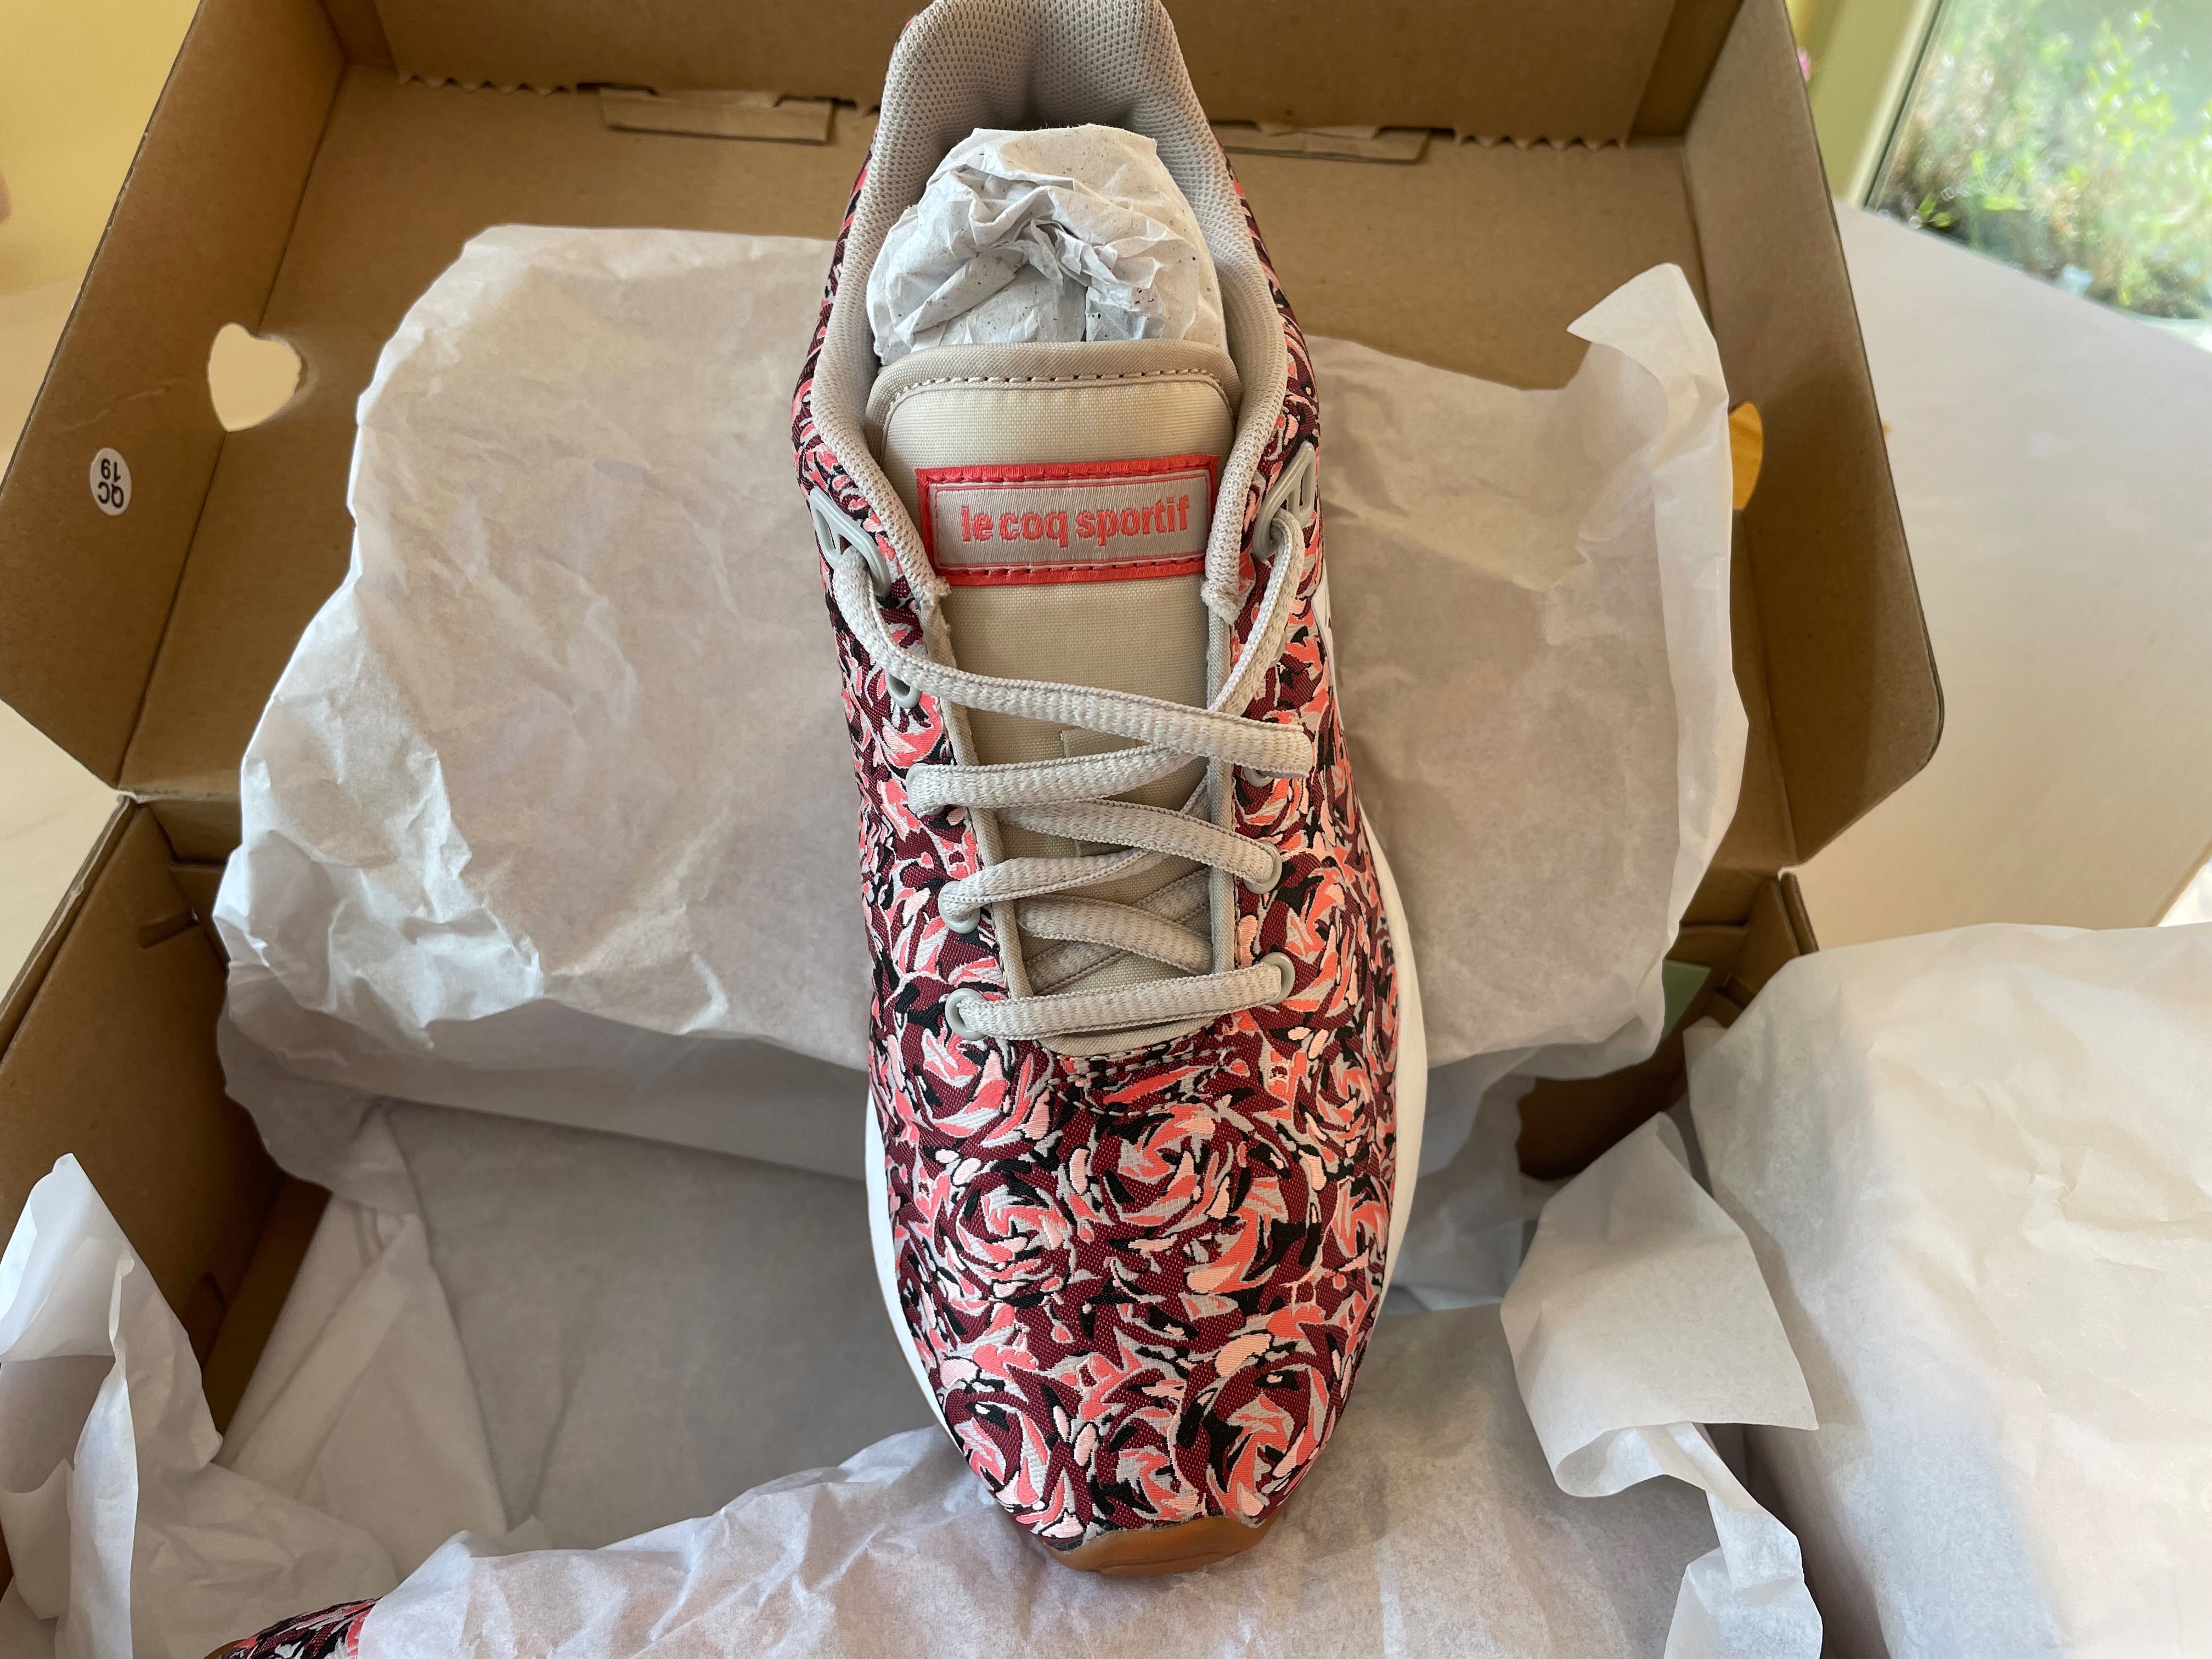 Le Coq Sportif дамски спортни обувки маратонки, 36.5-37 размер, нови